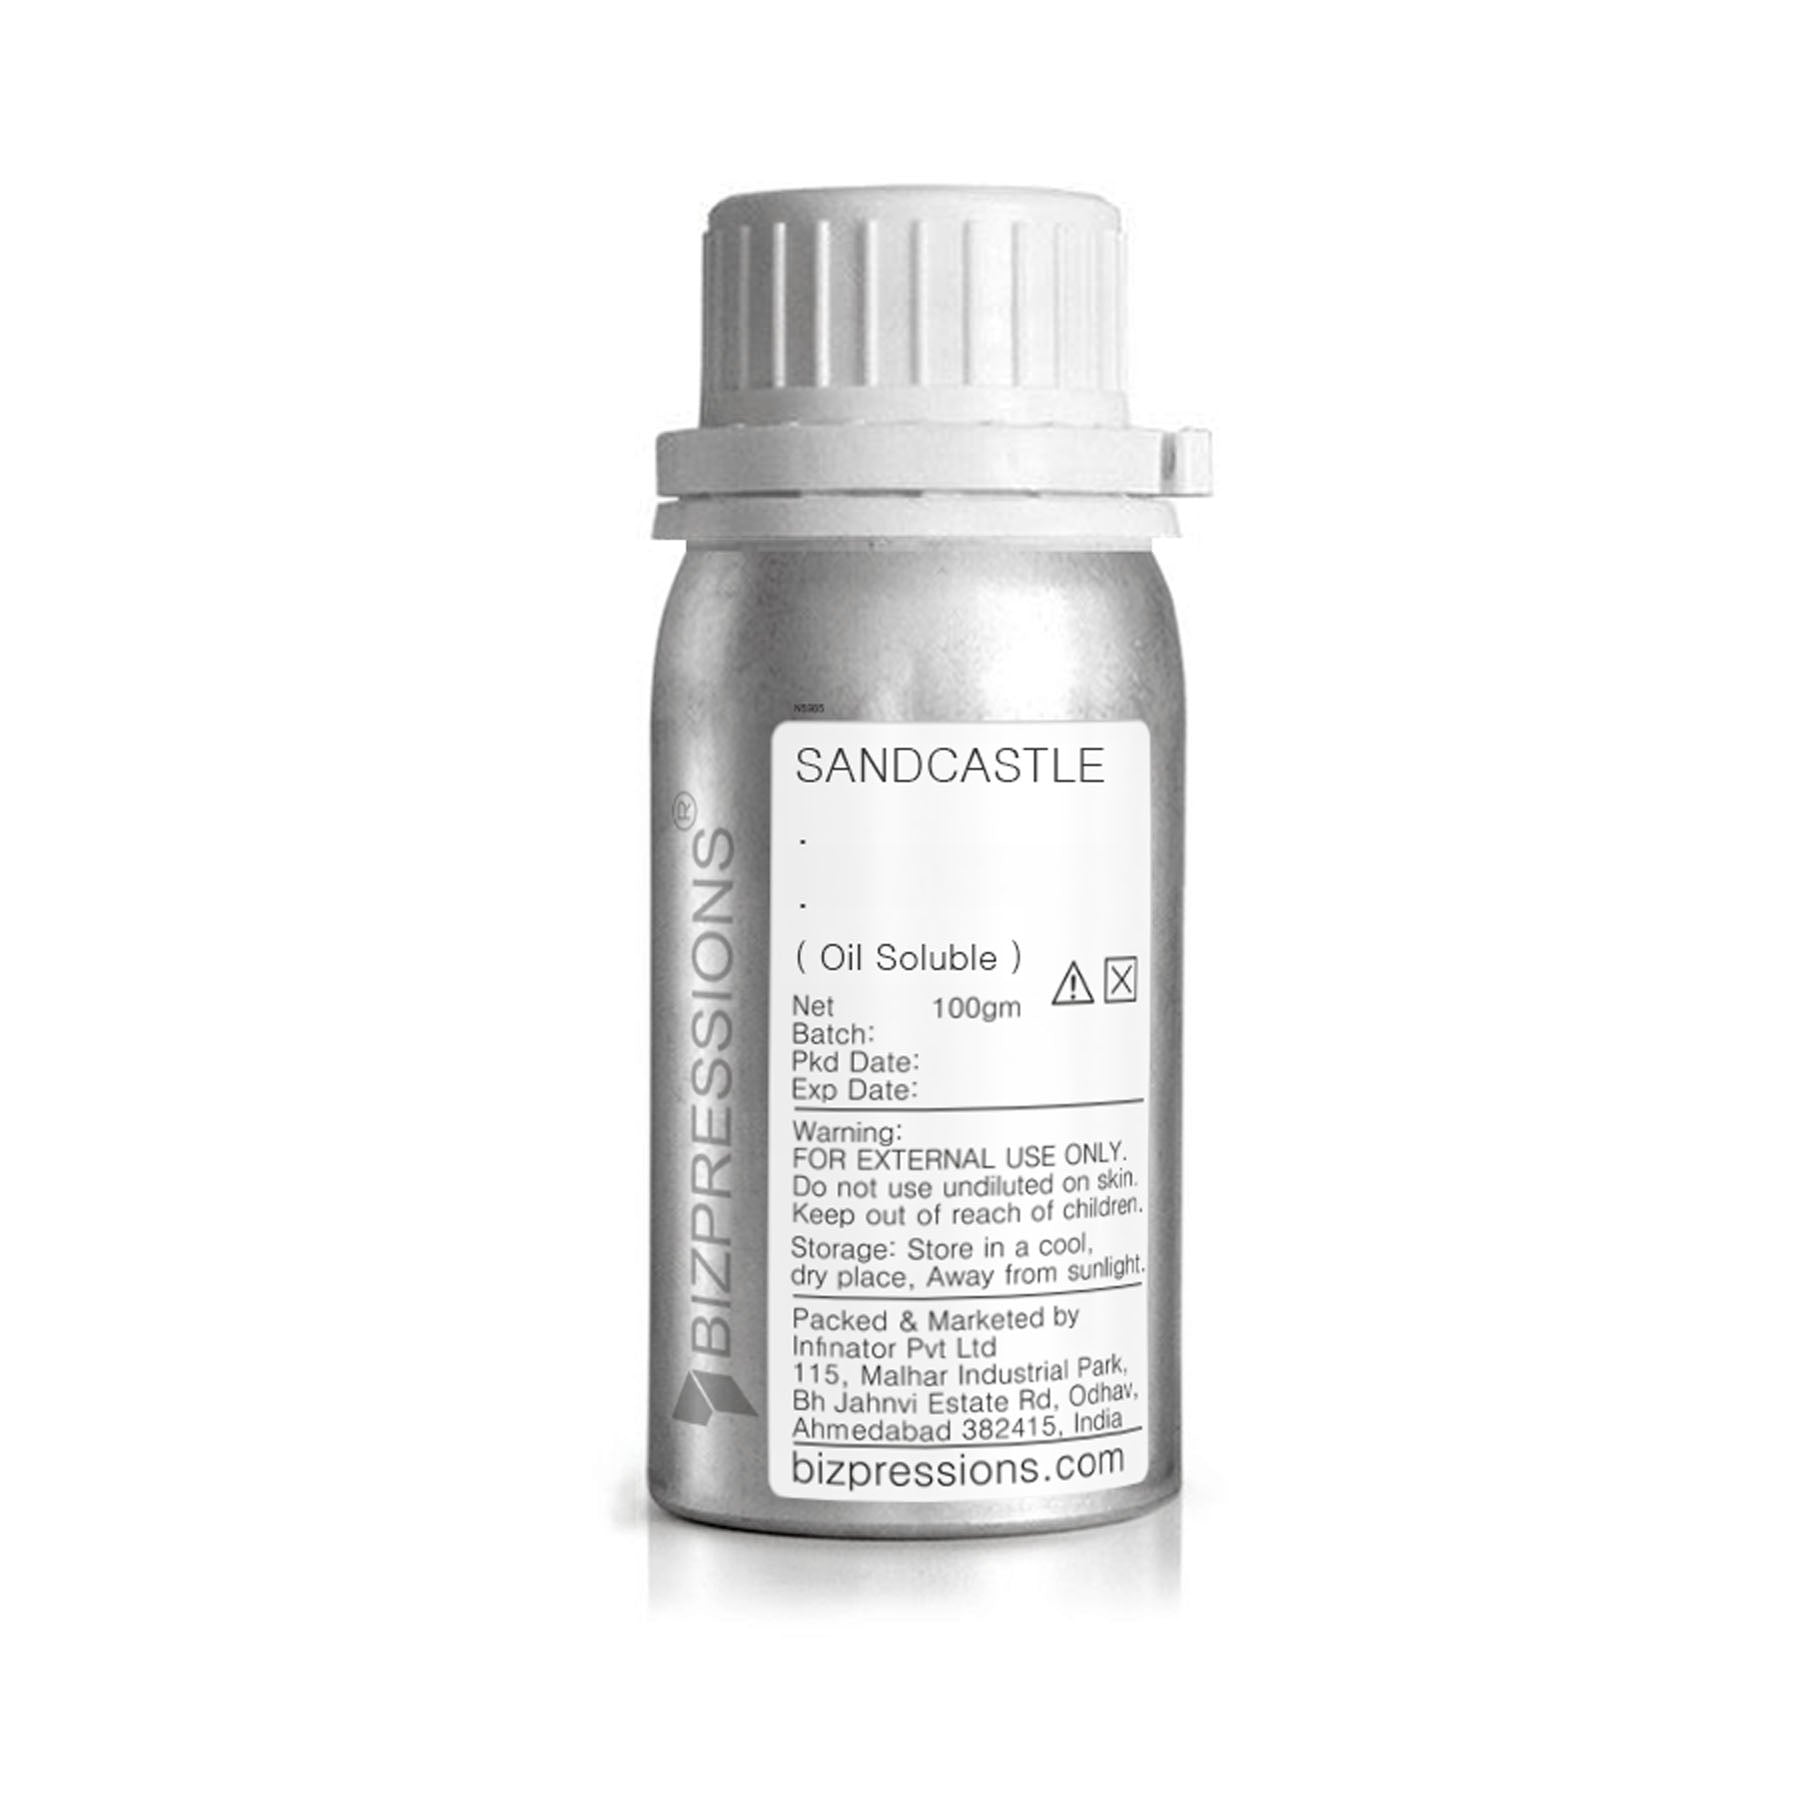 SANDCASTLE - Fragrance ( Oil Soluble ) - 100 gm